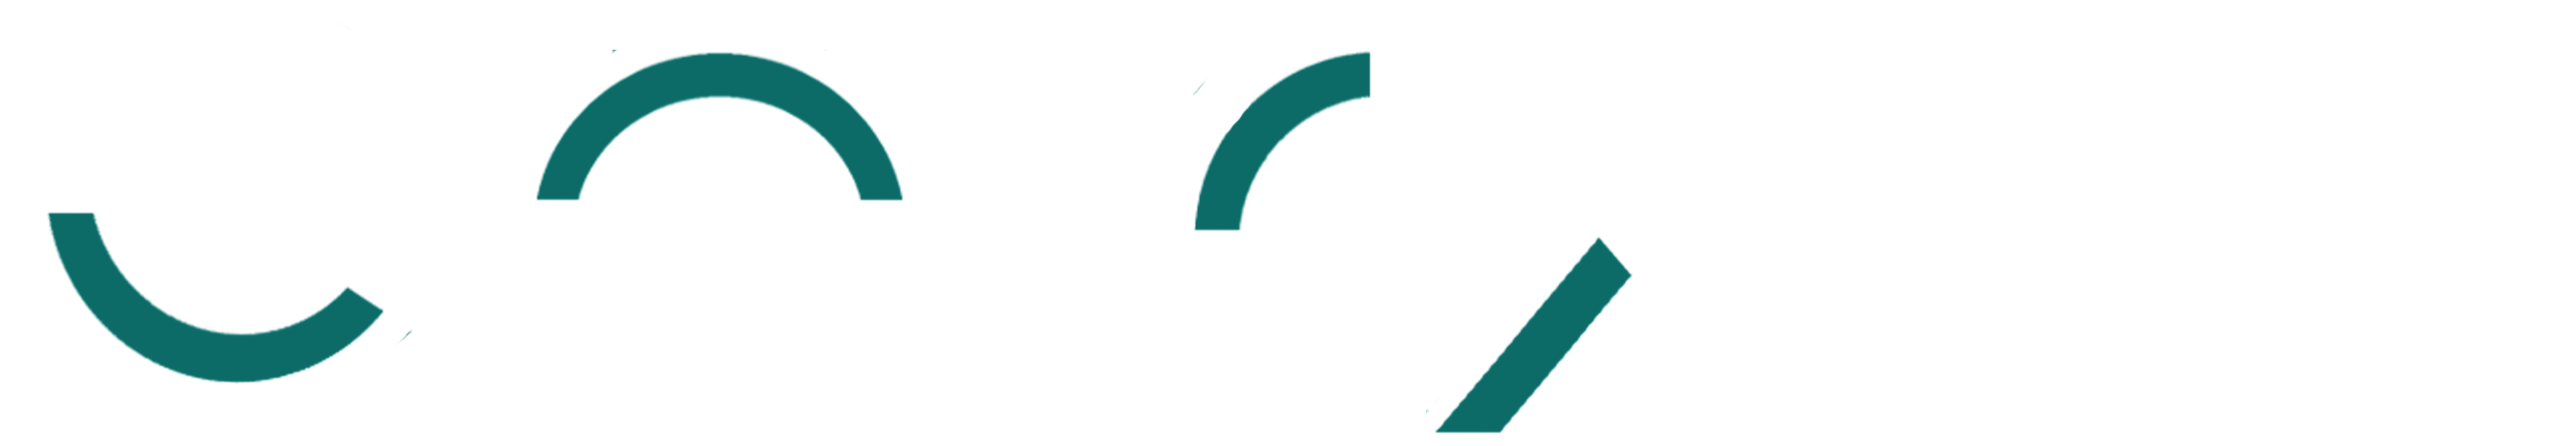 Comx Footer Logo